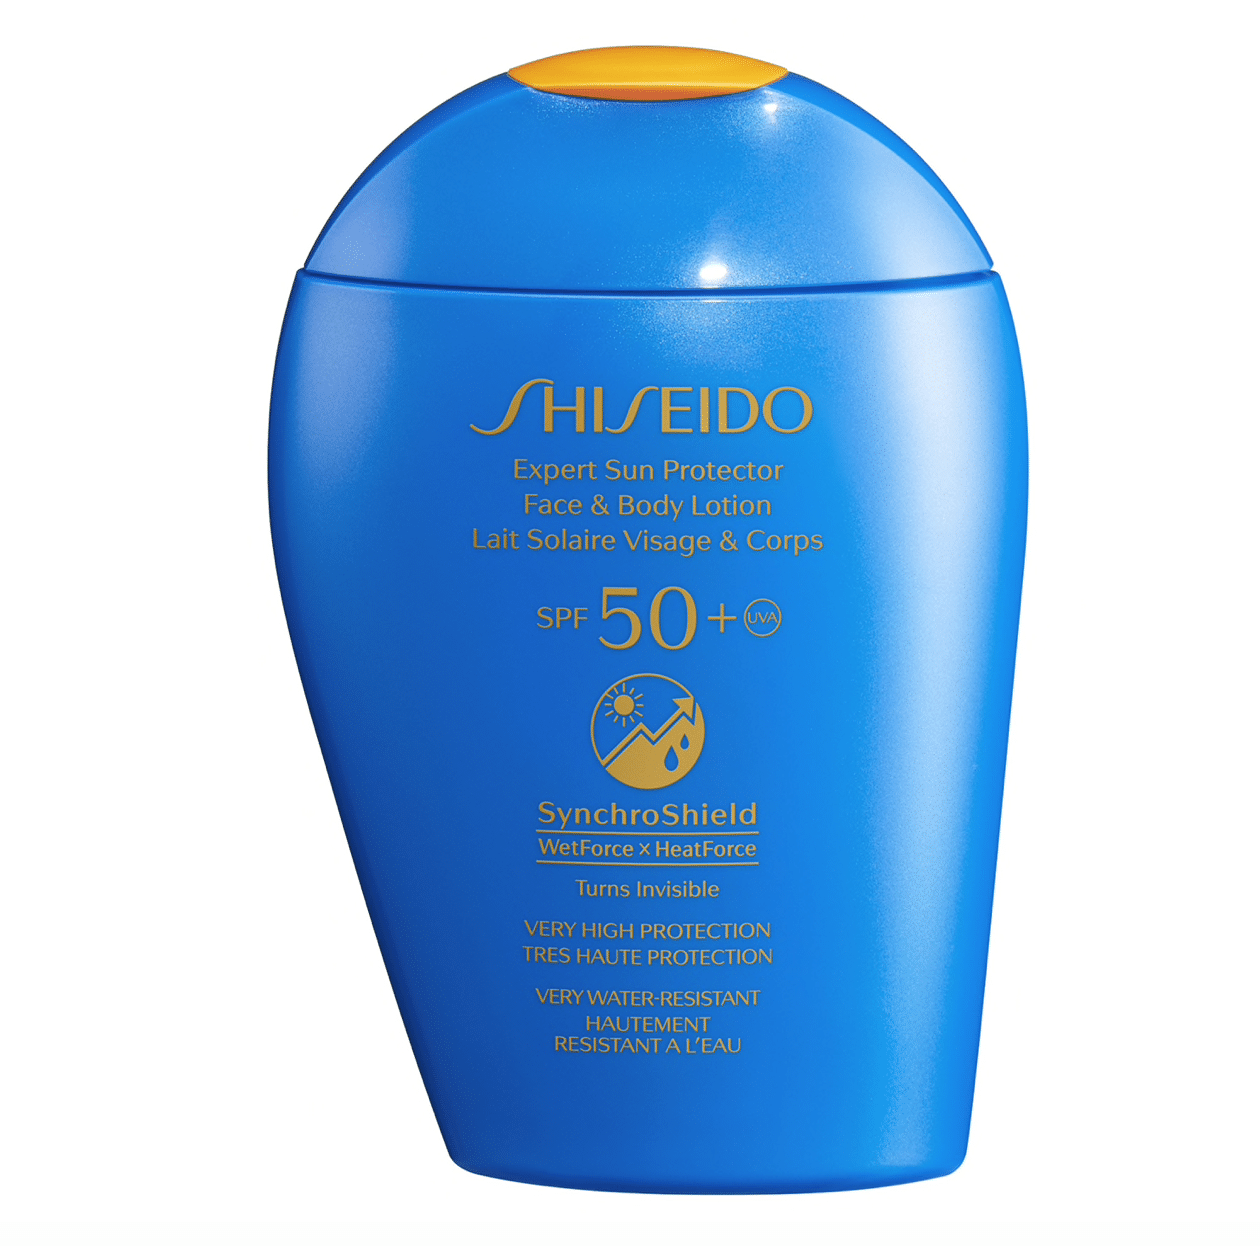 Shiseido - Expert sun protector